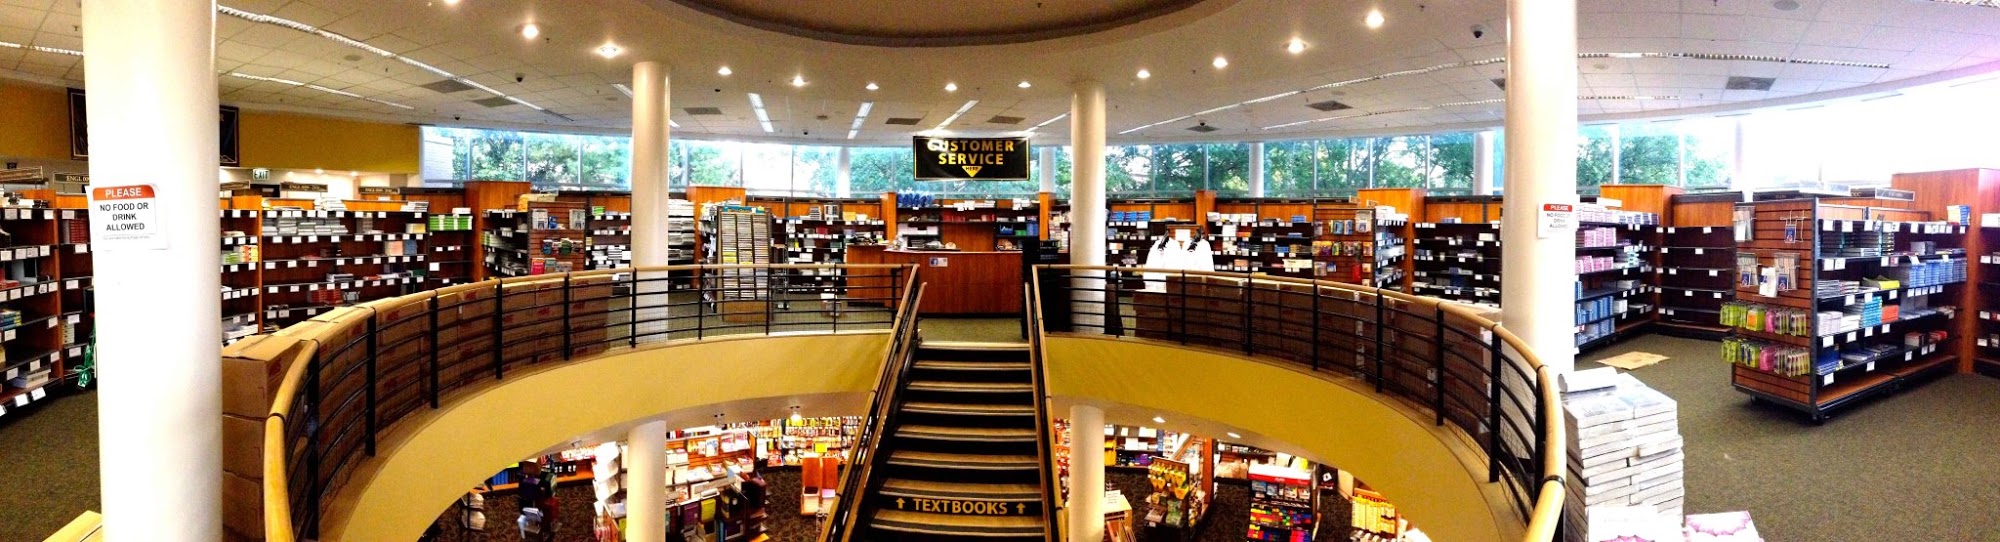 Kennesaw State University Bookstore